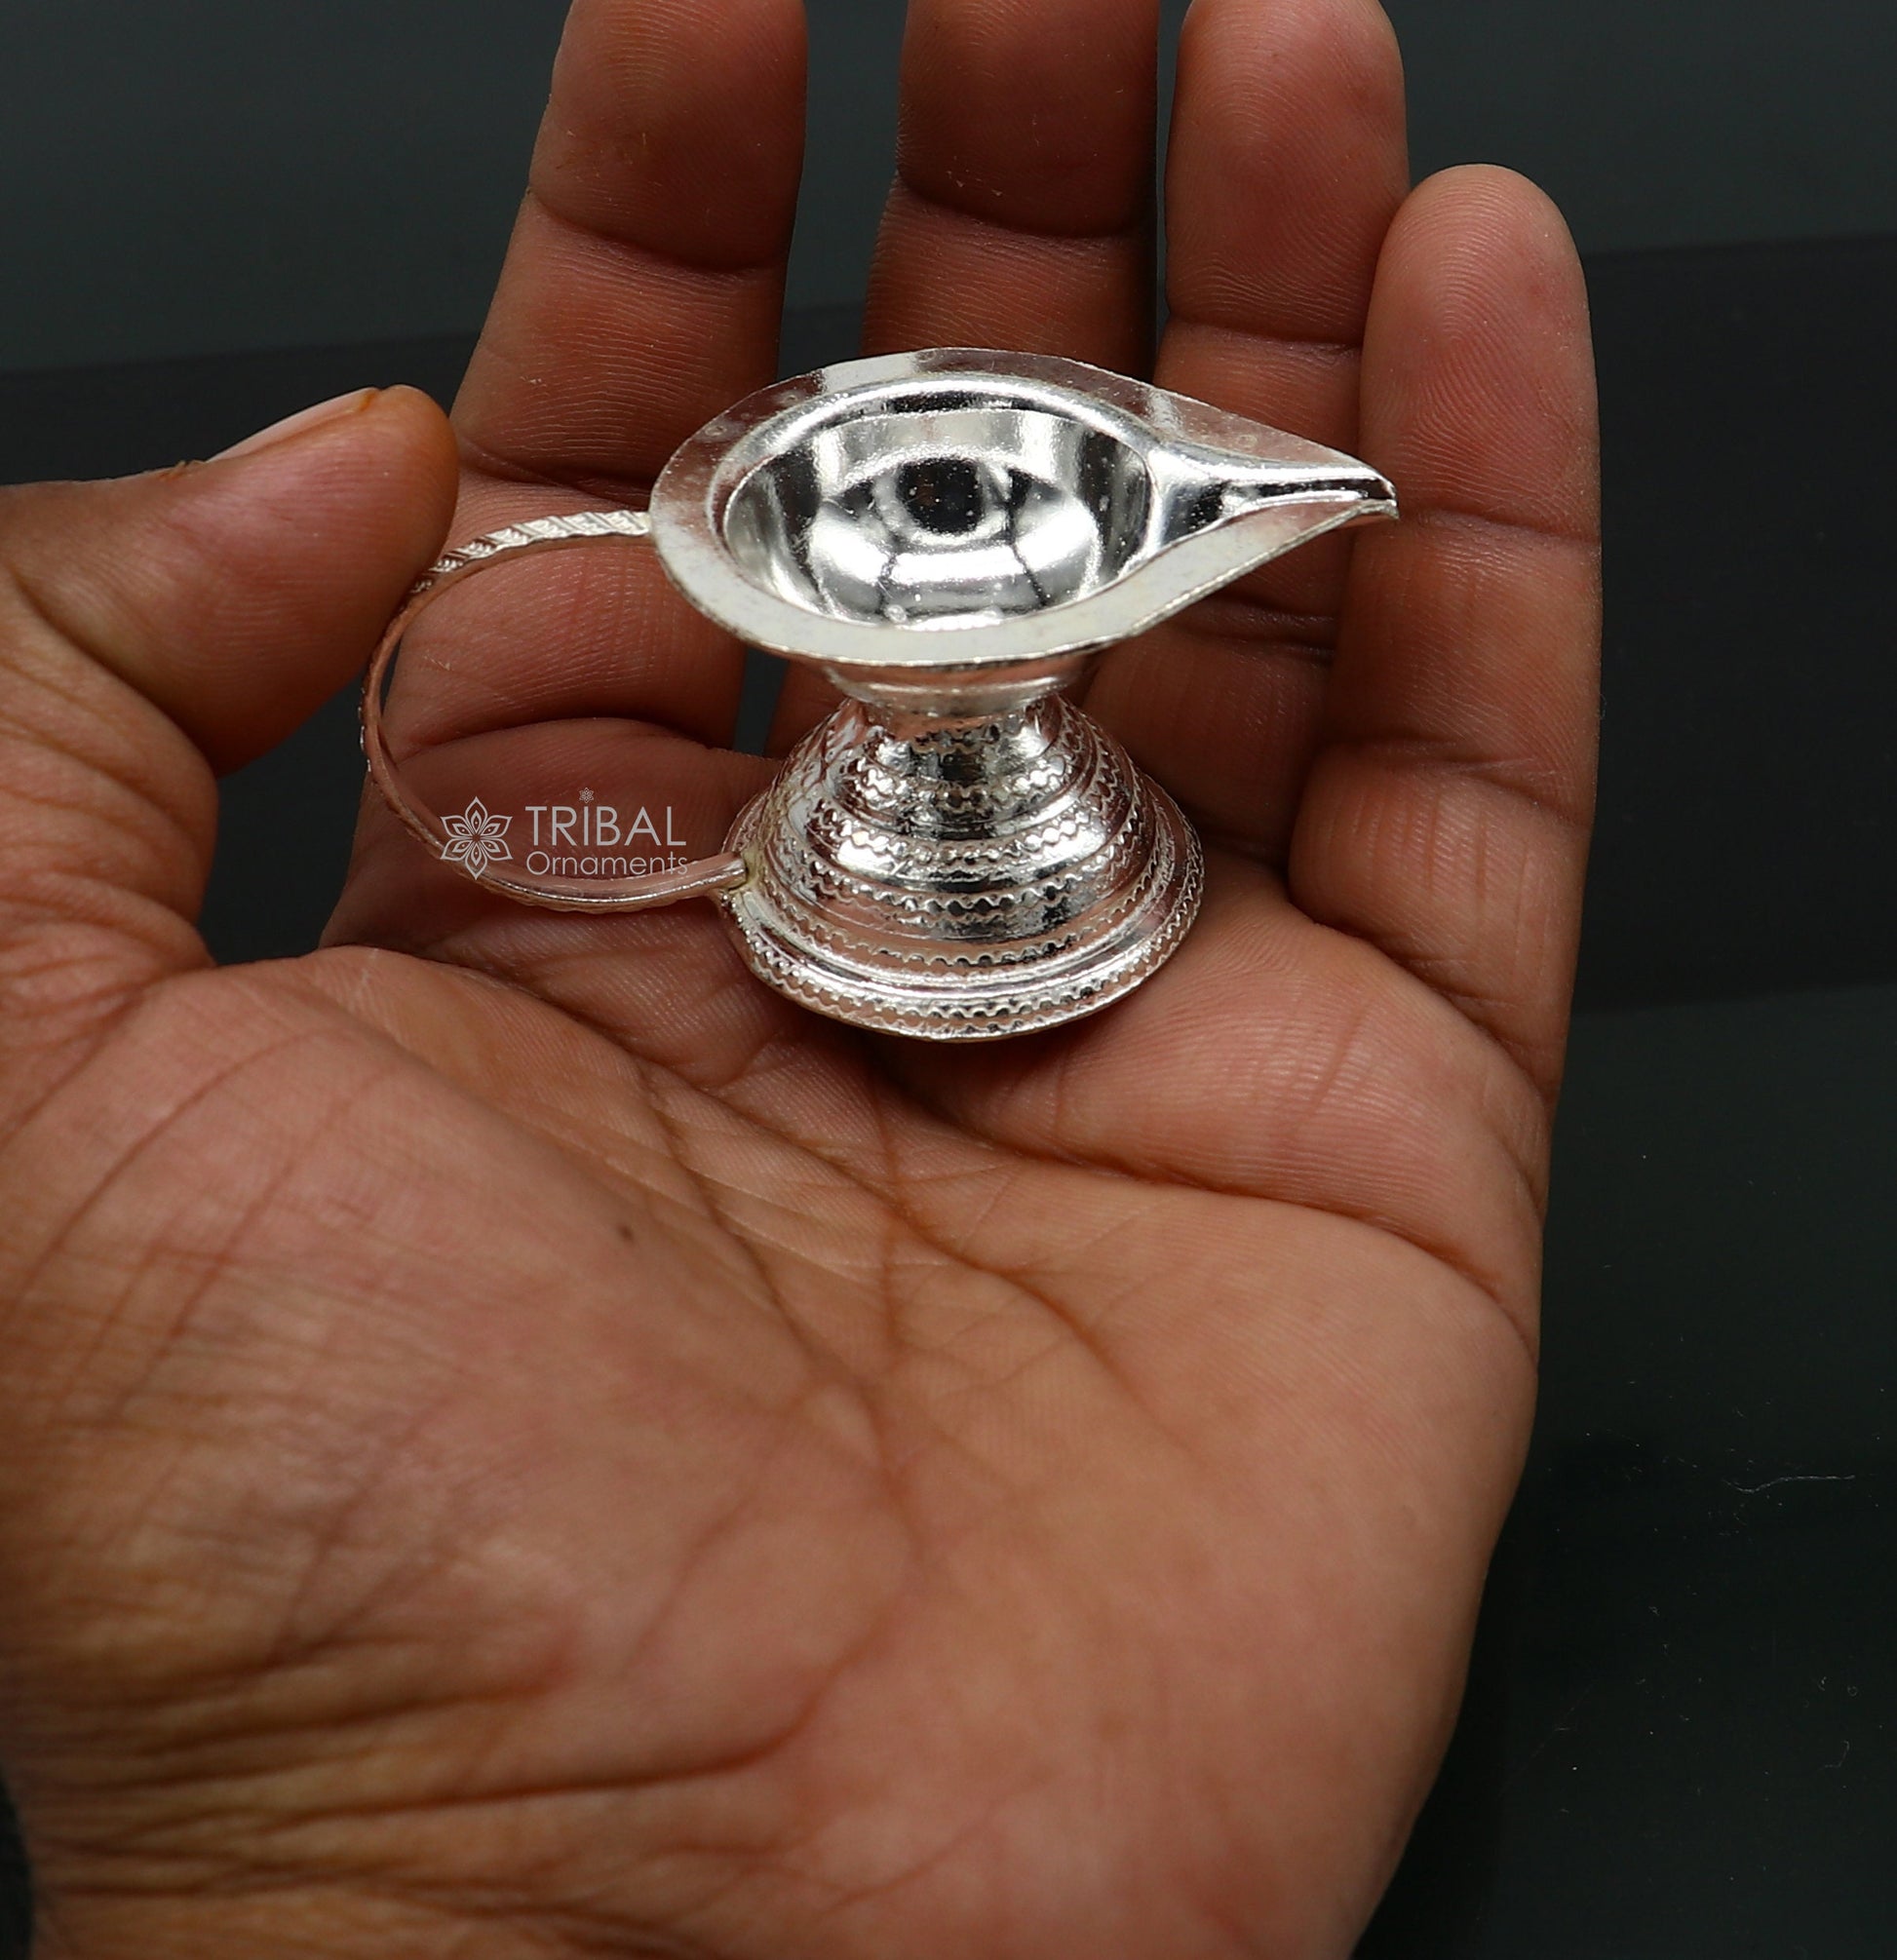 925 sterling silver handmade kappor dani, silver temple utensils, silver diya, deepak, silver single joth kapoor Aarti lamp art su1175 - TRIBAL ORNAMENTS